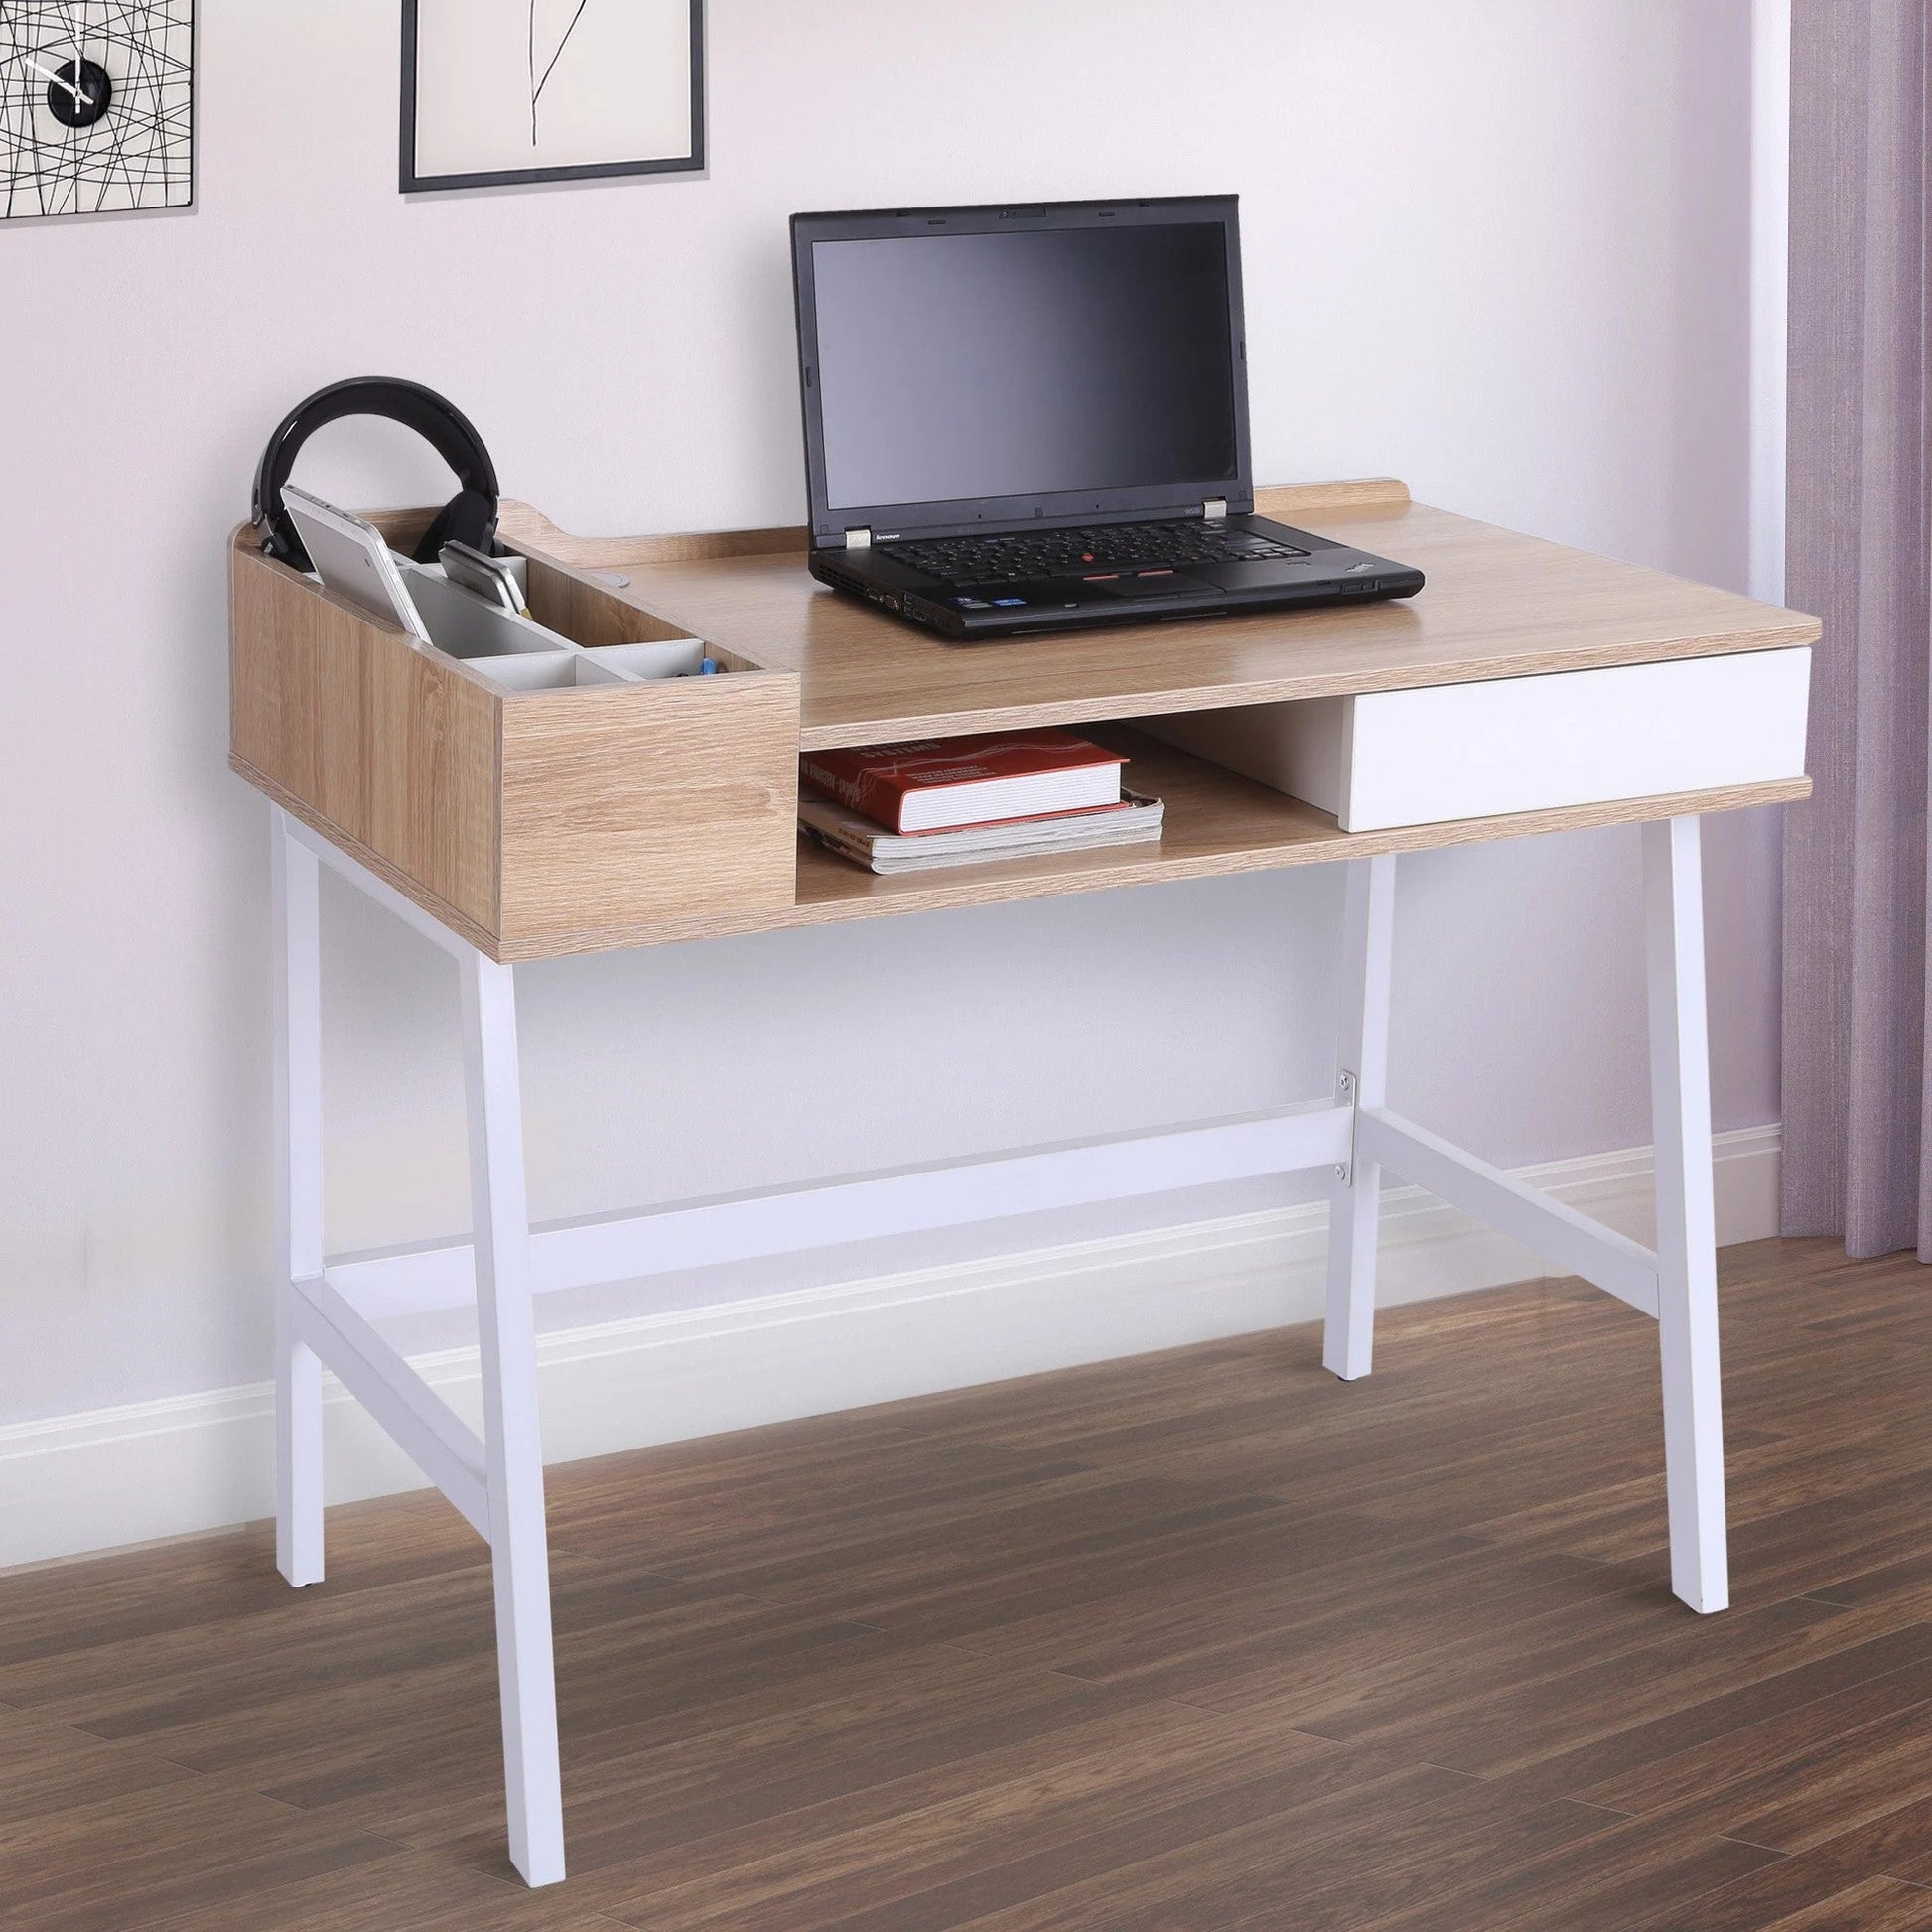 ProperAV Extra MDF Computer Desk - Oak/White - maplin.co.uk